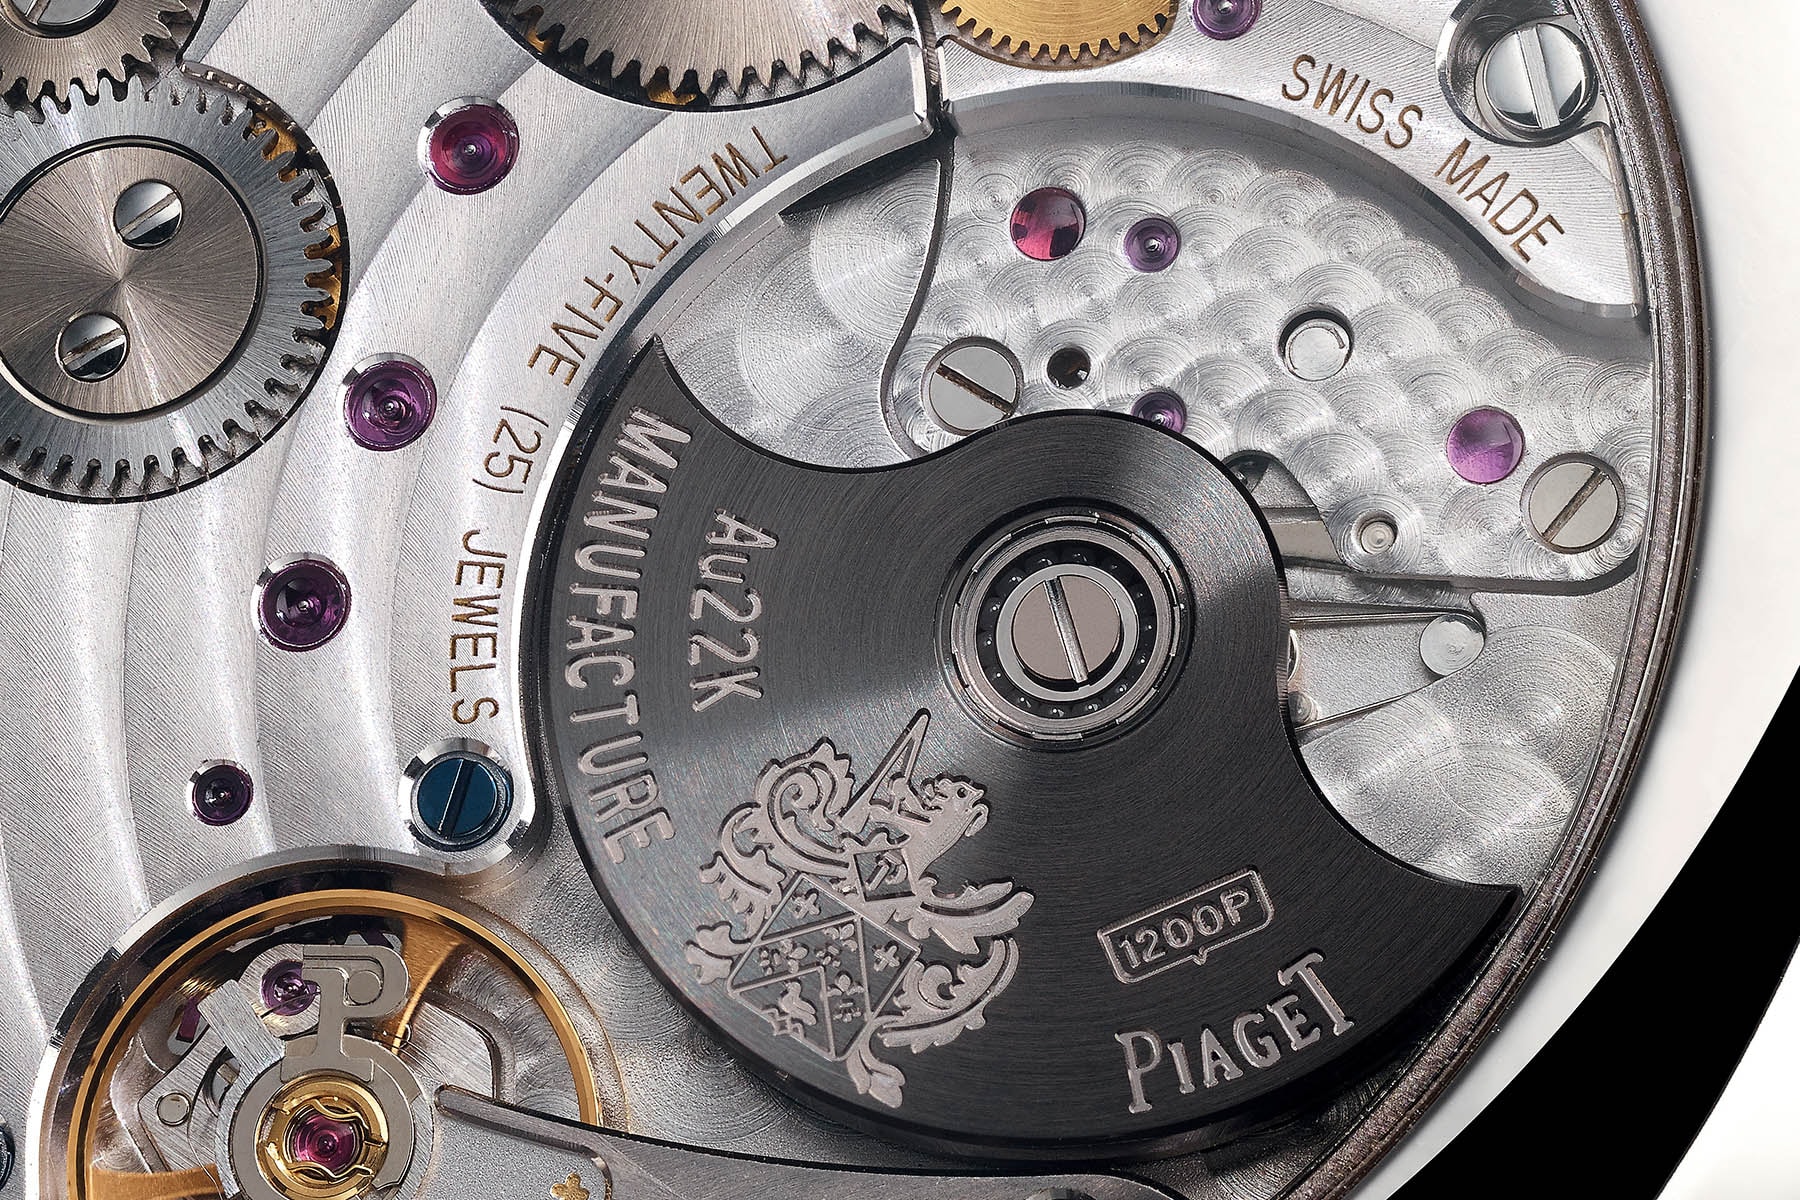 PIAGET 全球最薄腕錶 Altiplano 60 周年活動回顧